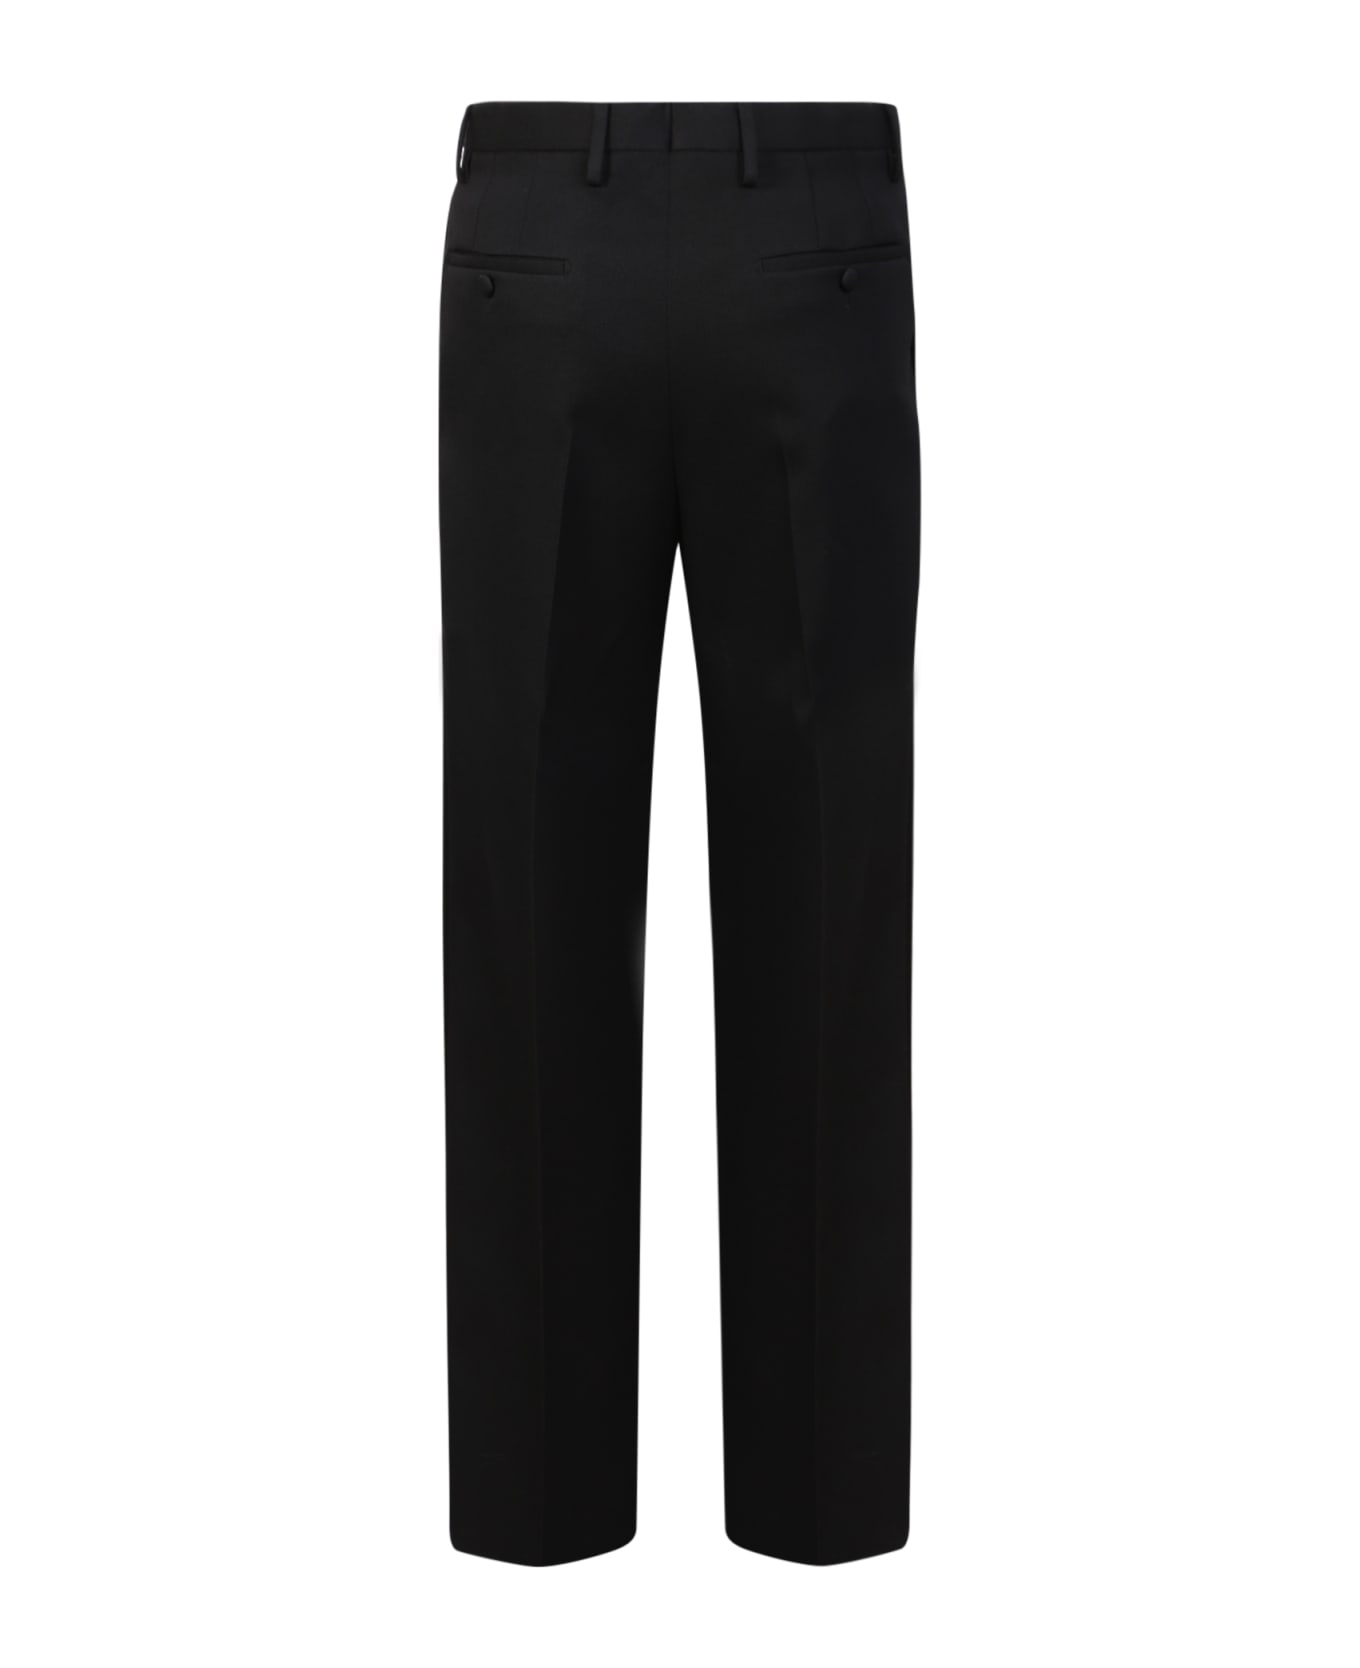 Lanvin Tailored Trousers - Black